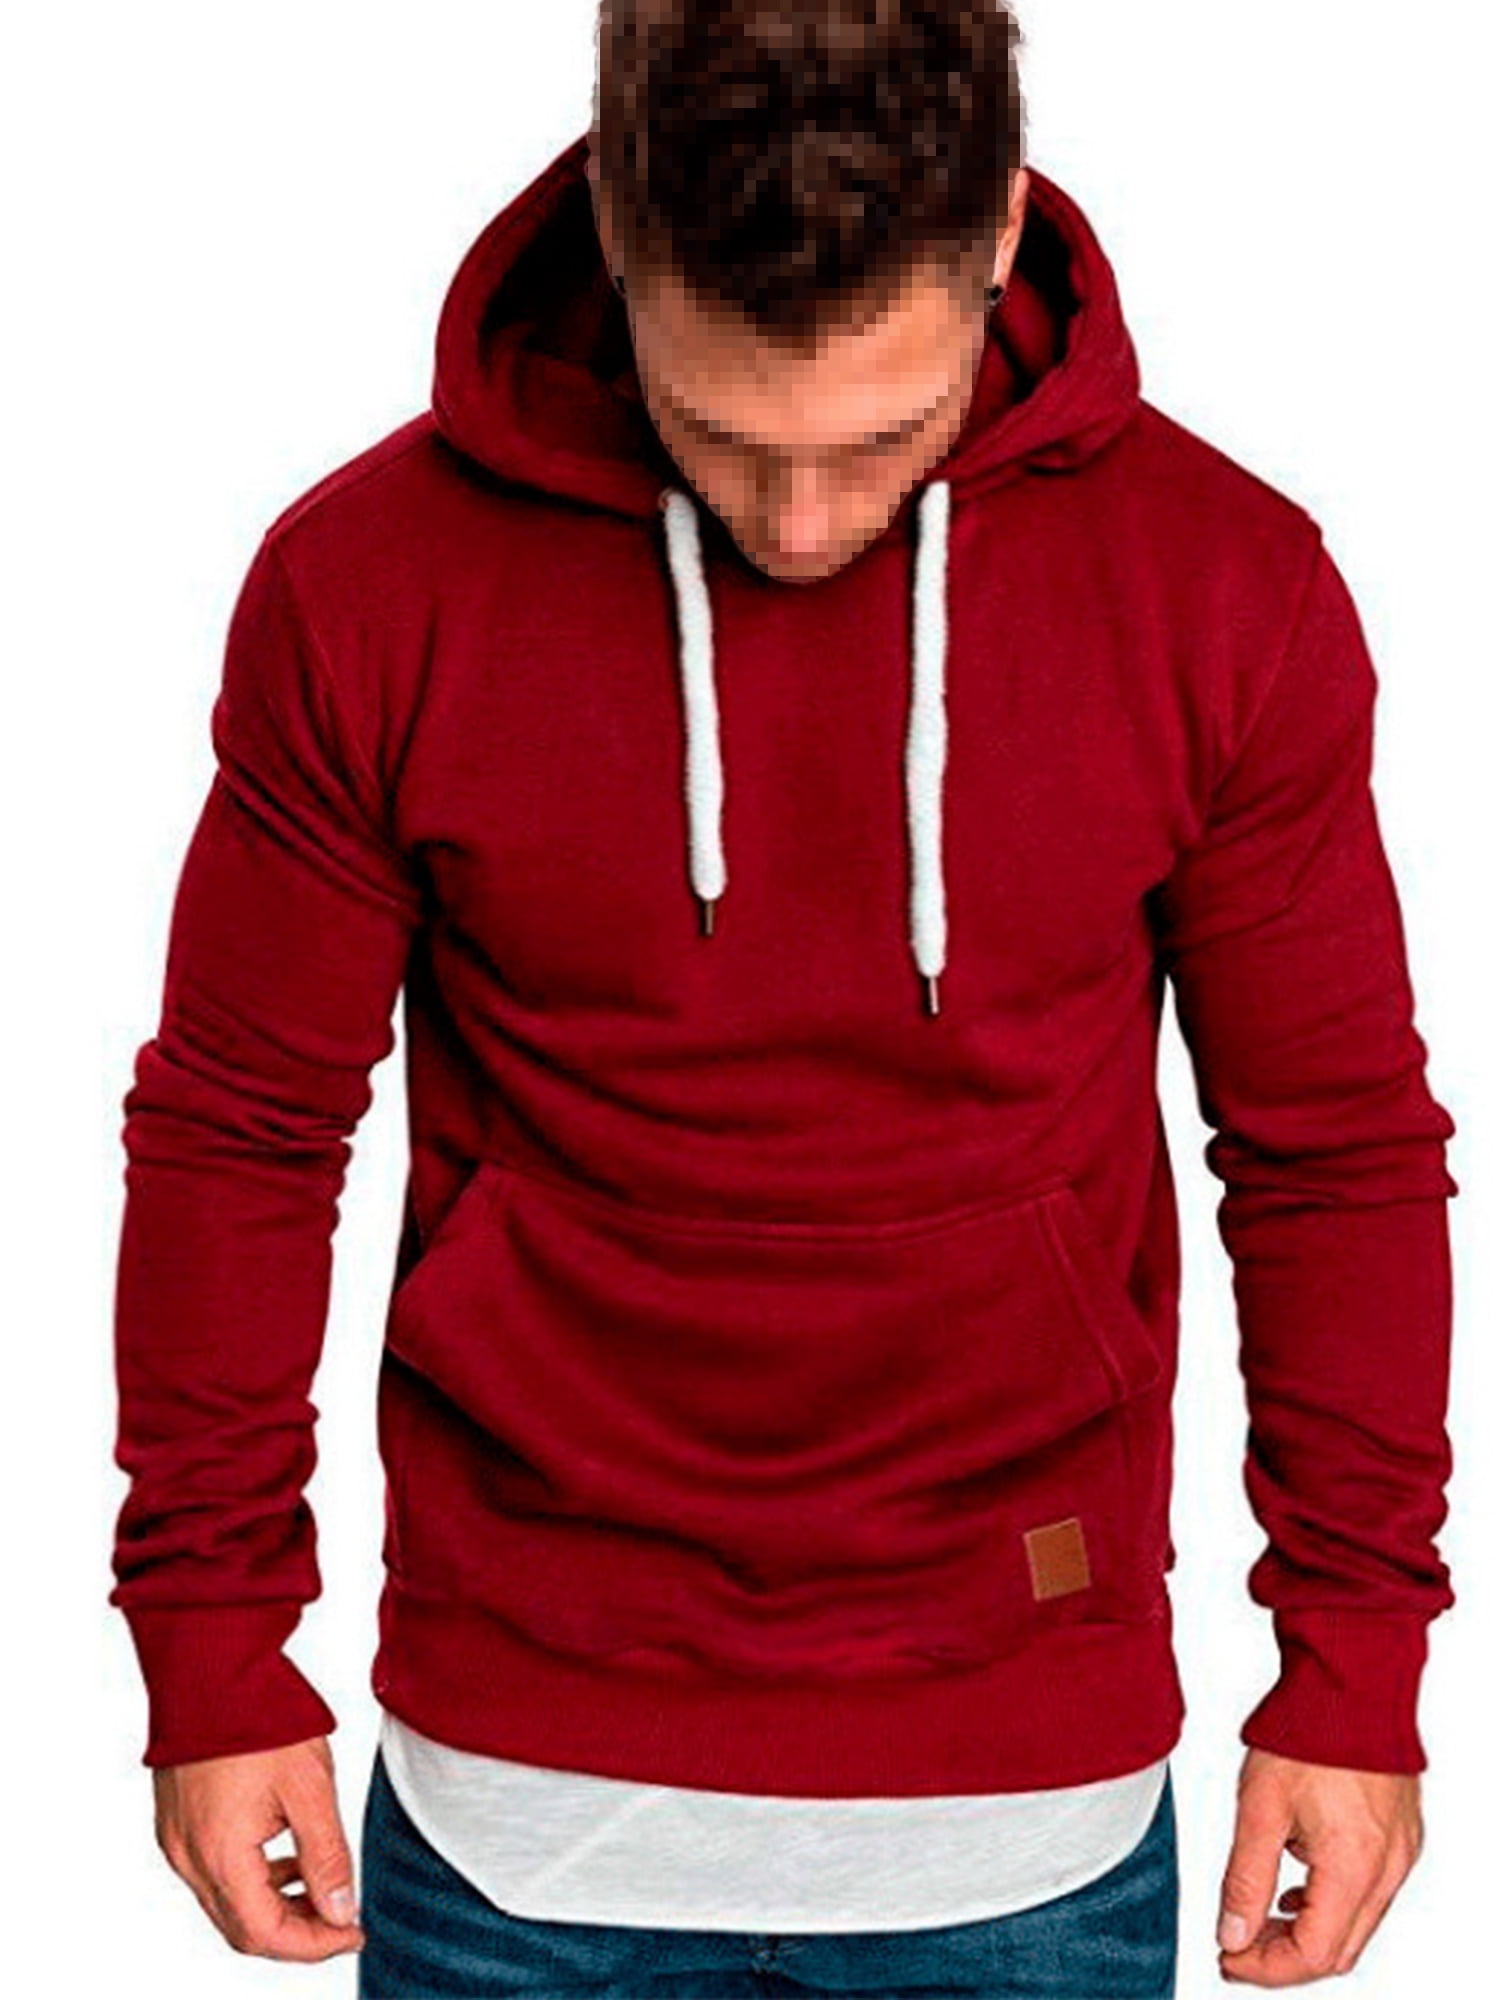 Details about   Mens Long Sleeve Hoody Sports Hoodie Solid Baggy Pullover Casual Sweatshirt Top 